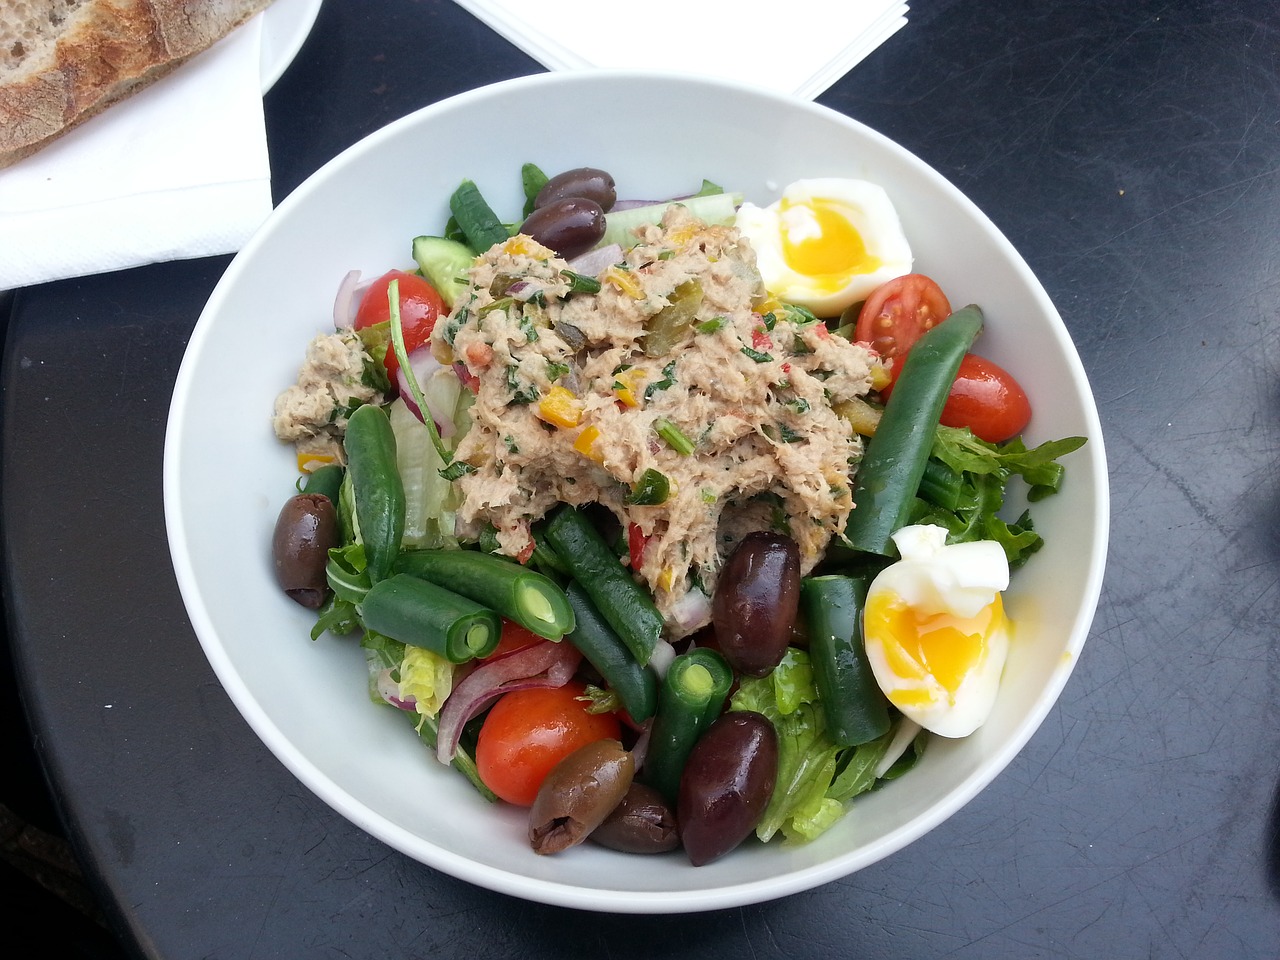 Giada De Laurentiis' White Bean and Tuna Salad